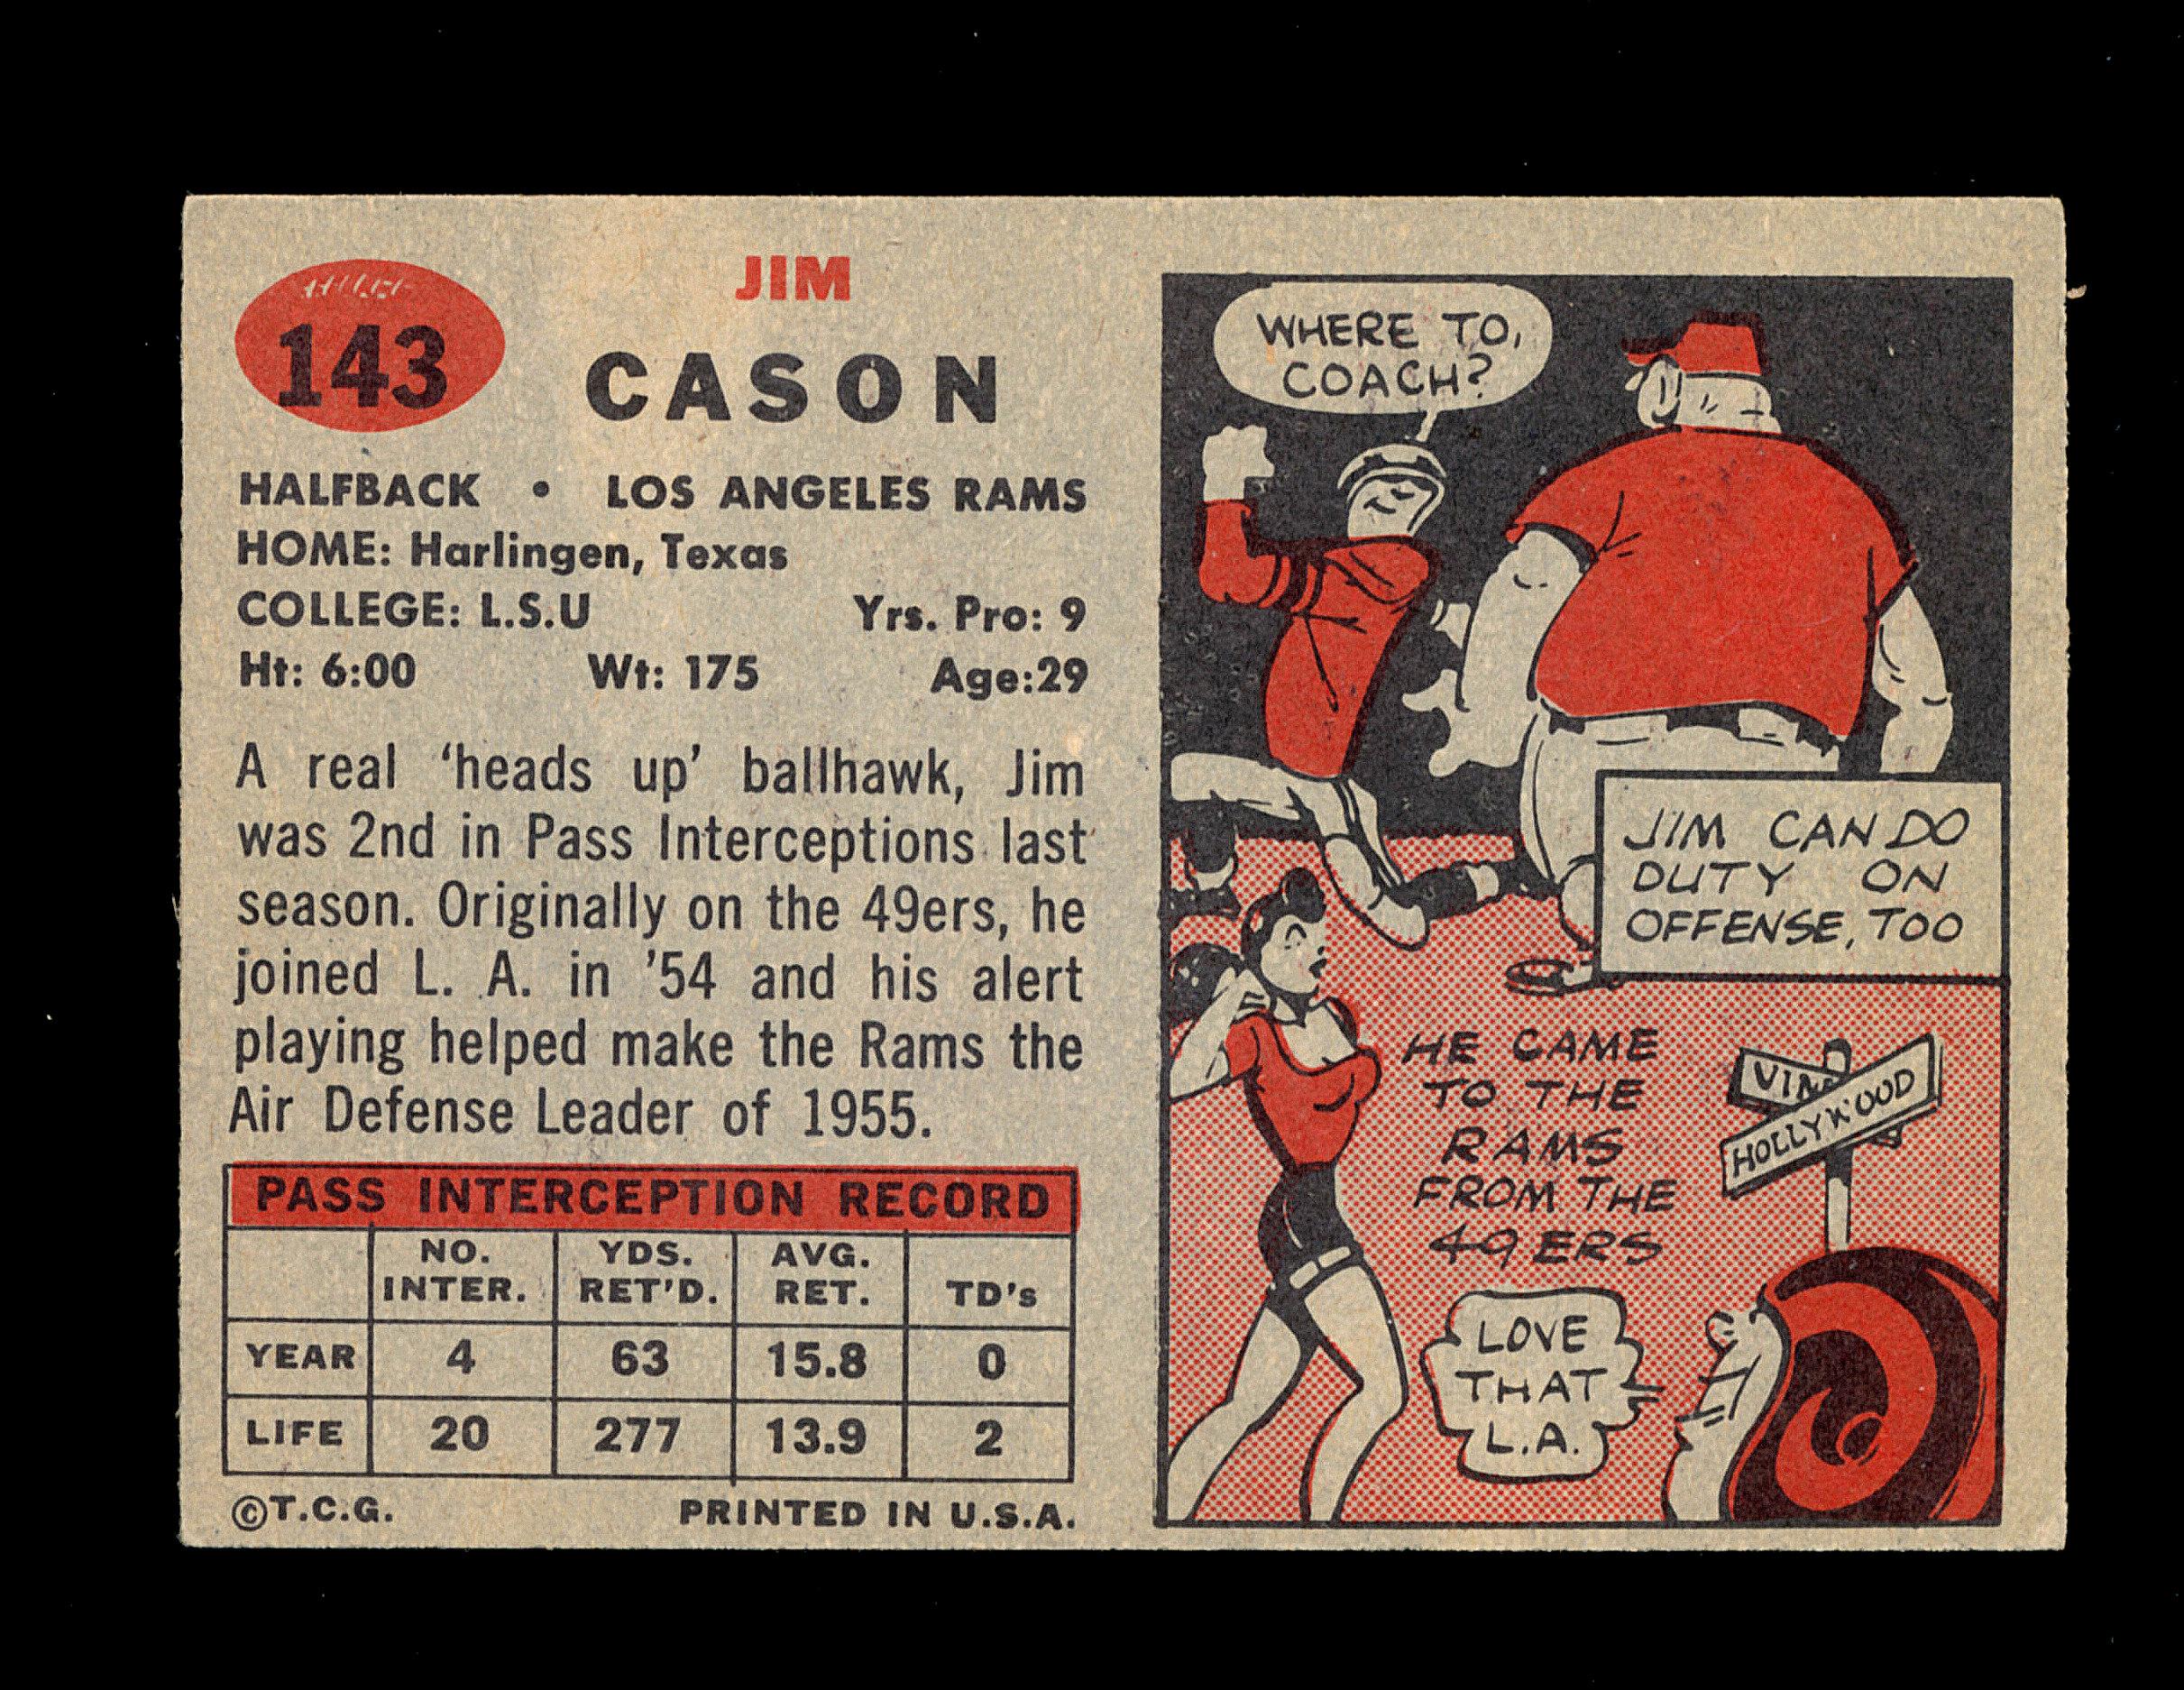 1957 Topps Football Card #143 Jim Cason Los Angeles Rams